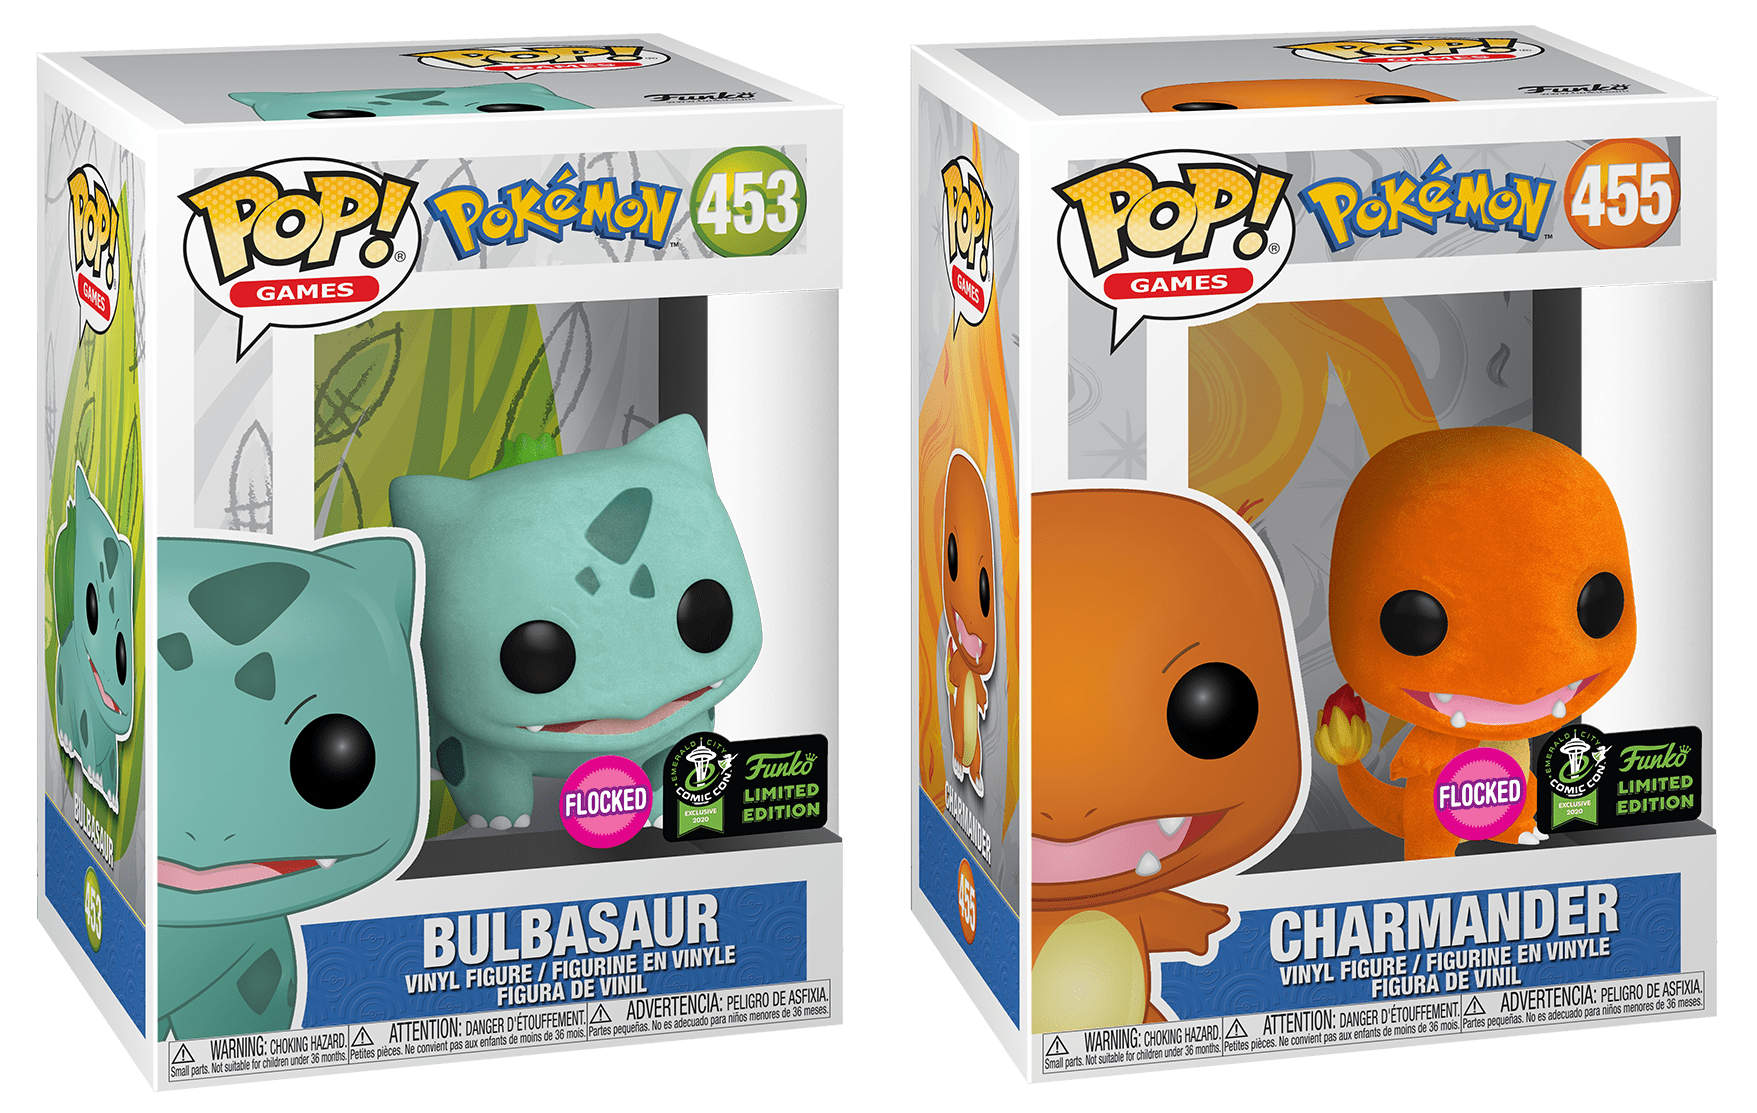 Flocked Bulbasaur and Charmander Funko Pop figurines revealed as